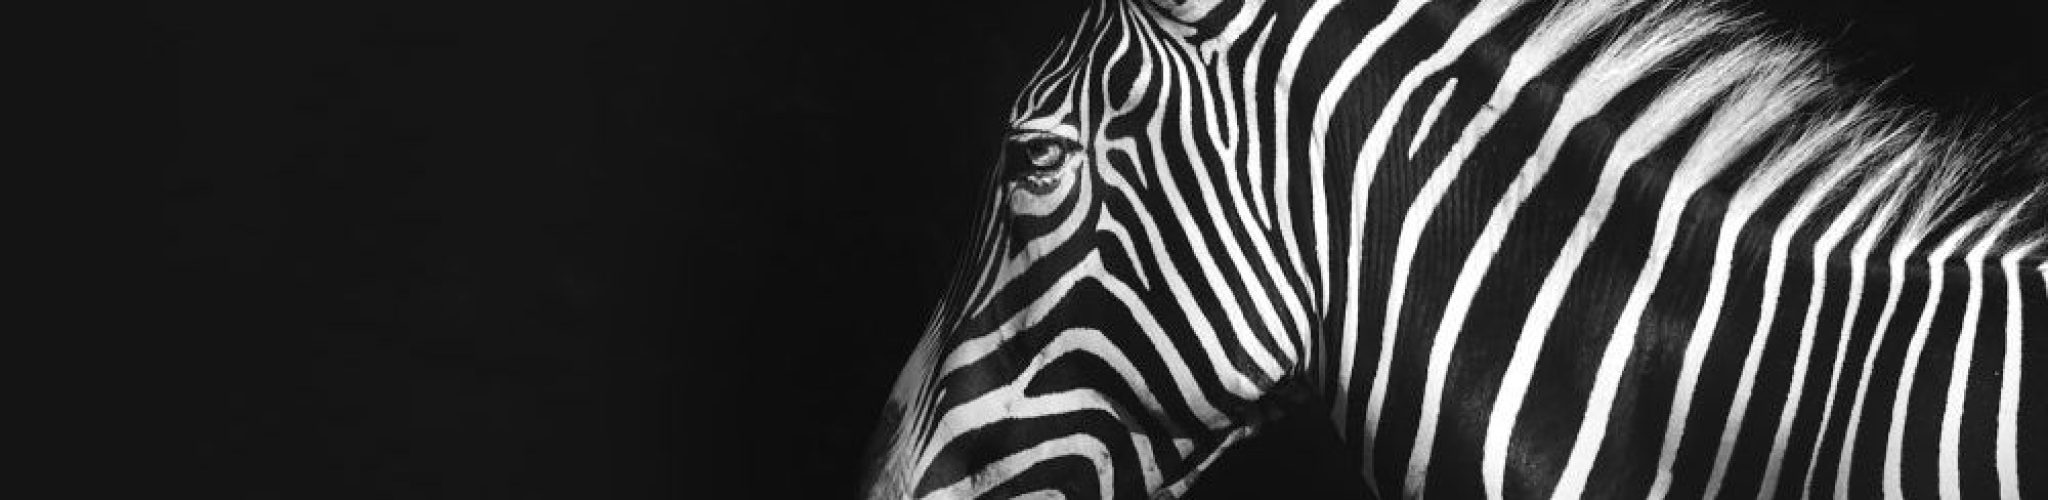 Rare Learn Zebra Home page image